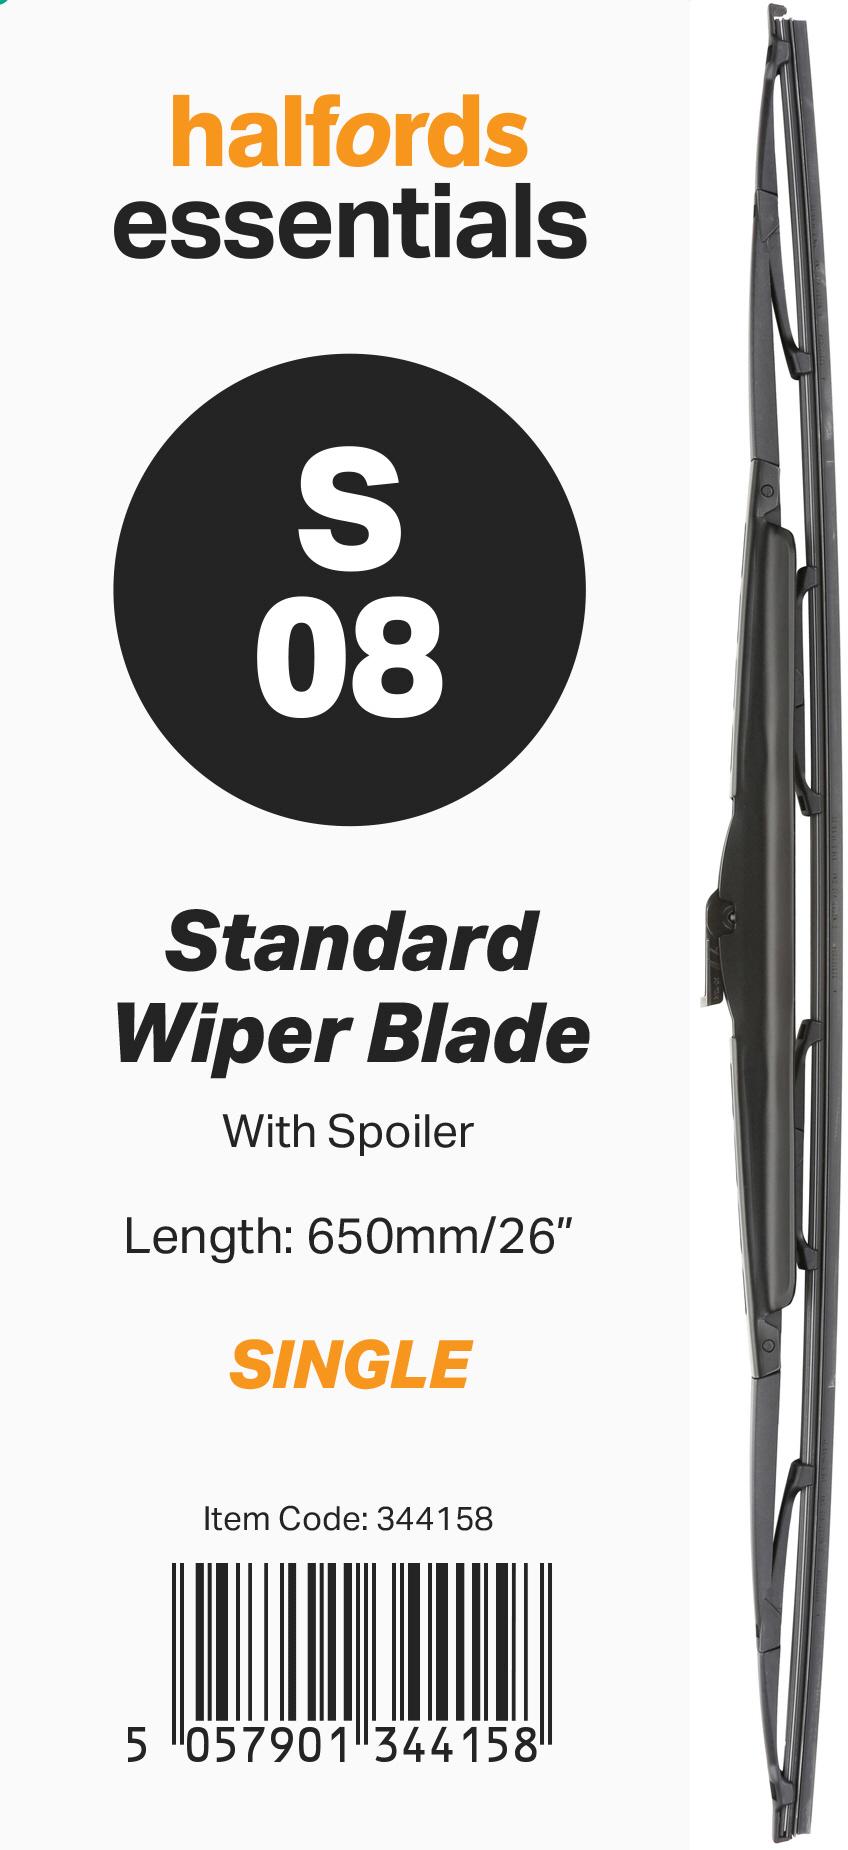 Halfords Essentials Spoiler Wiper Blade S08 - 26 Inch